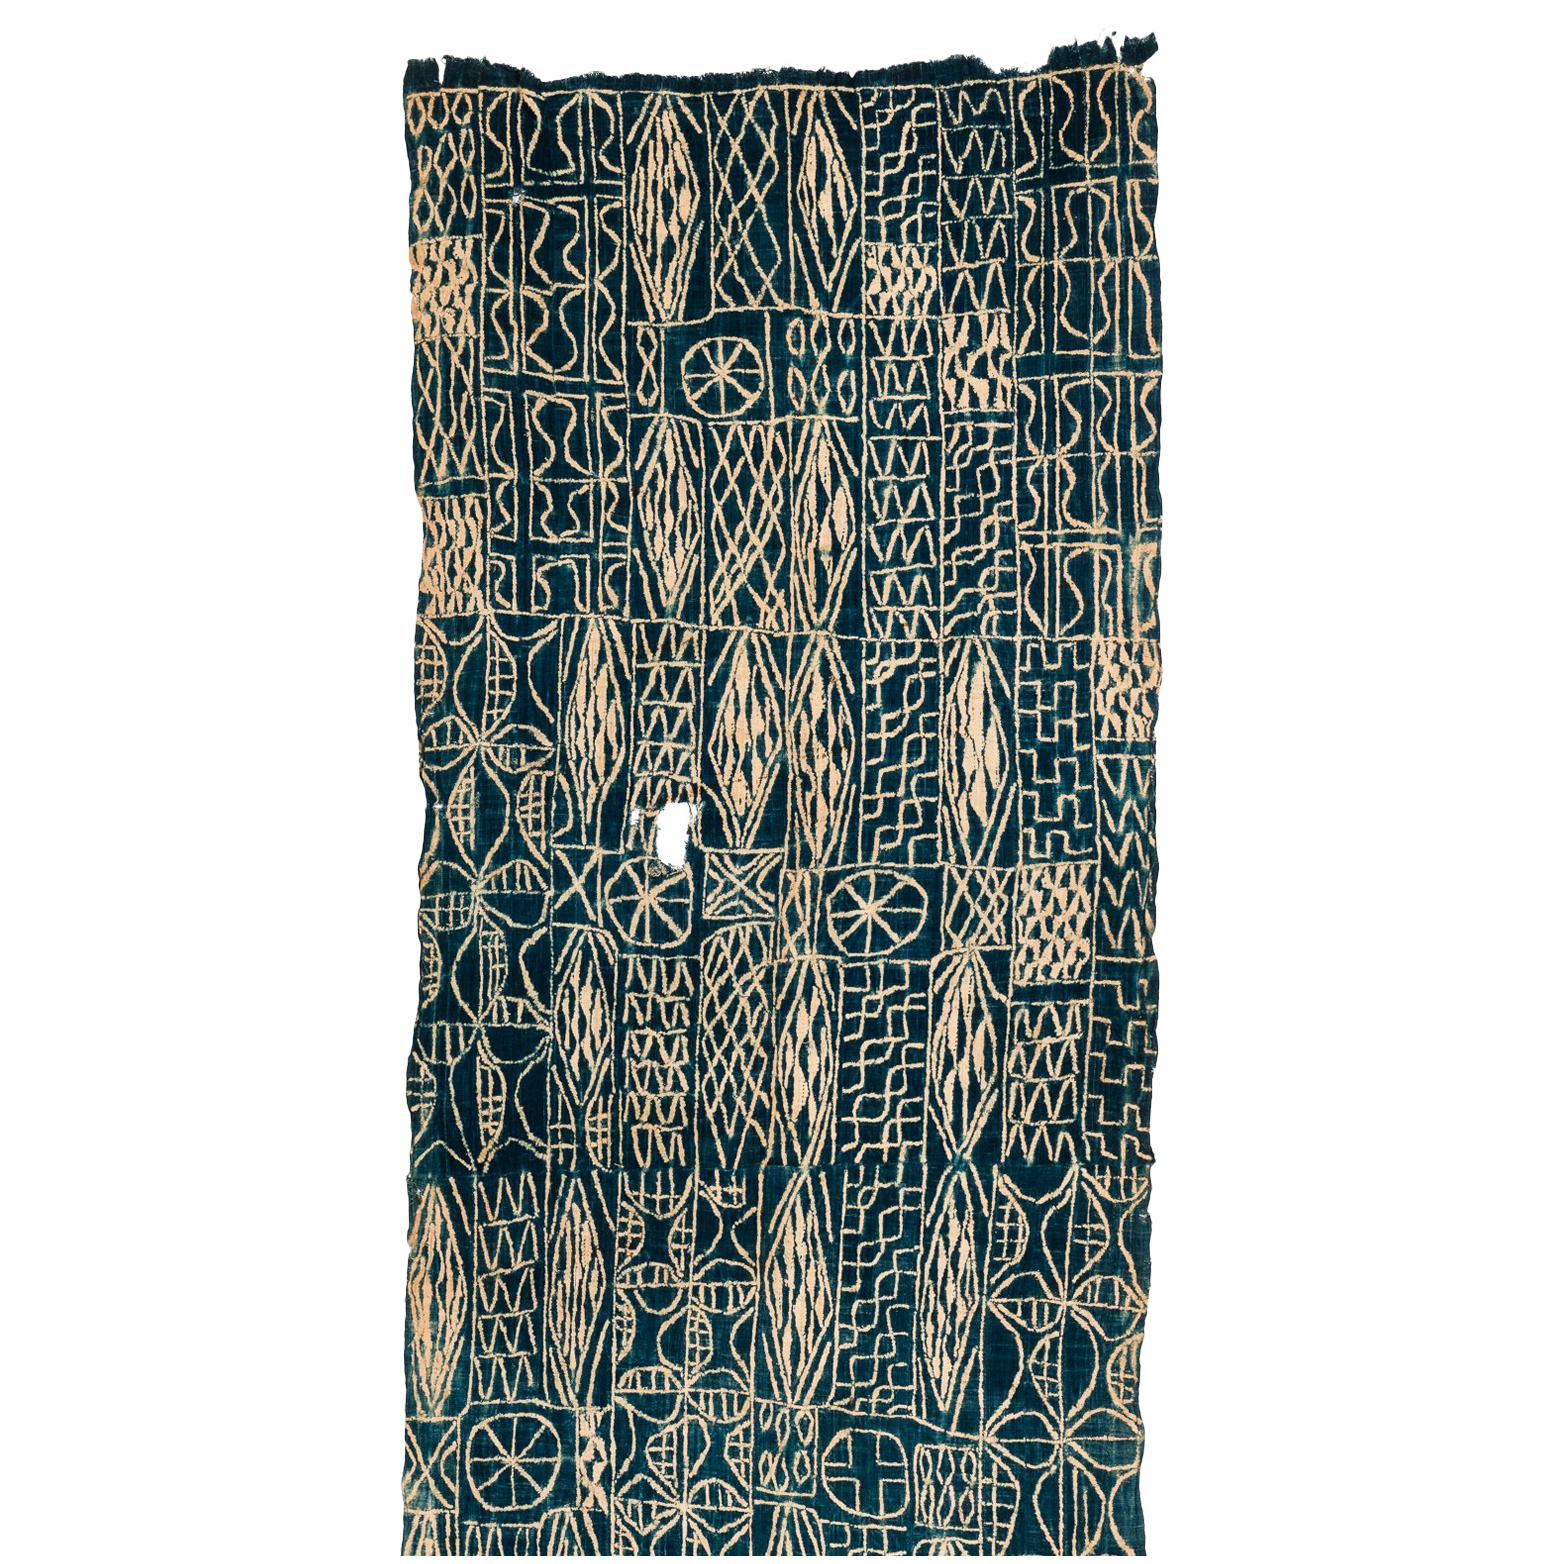 Antikes indigoblaues gefärbtes Textil/Wandbehang aus Kamee, Afrika